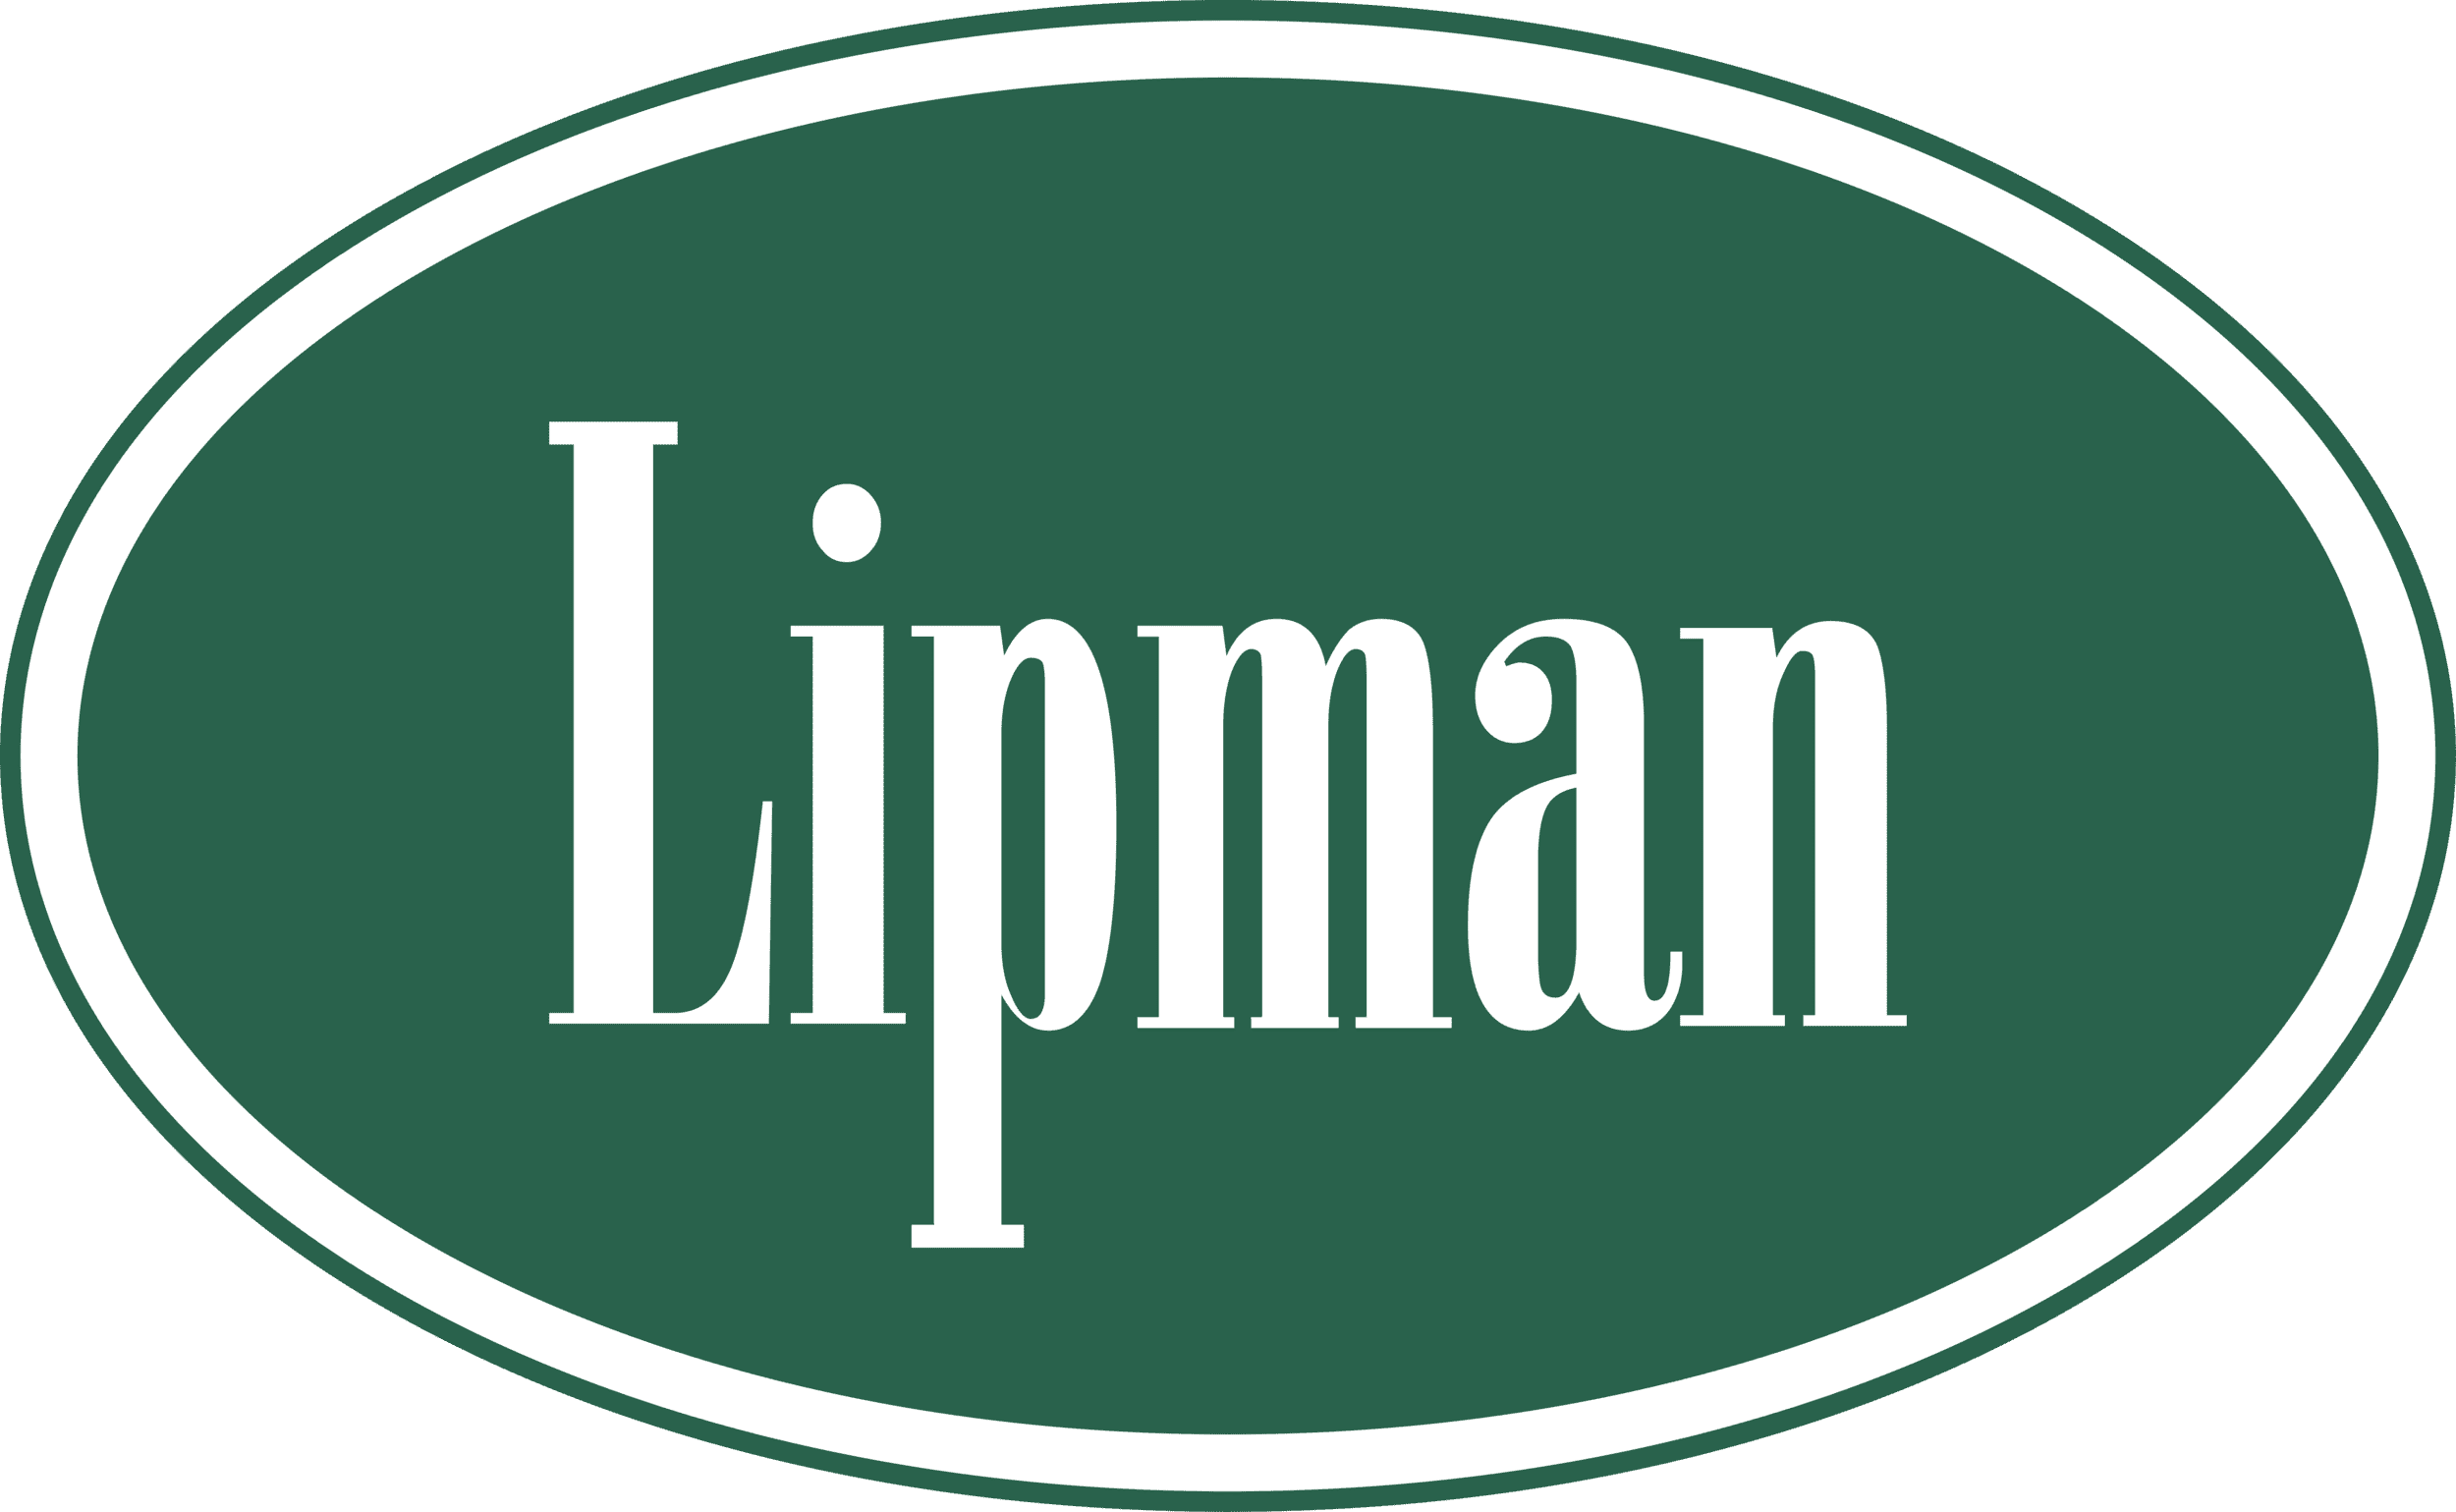 Jack C. Massey Leadership Award Lipman Oval Logo HiRespng 1